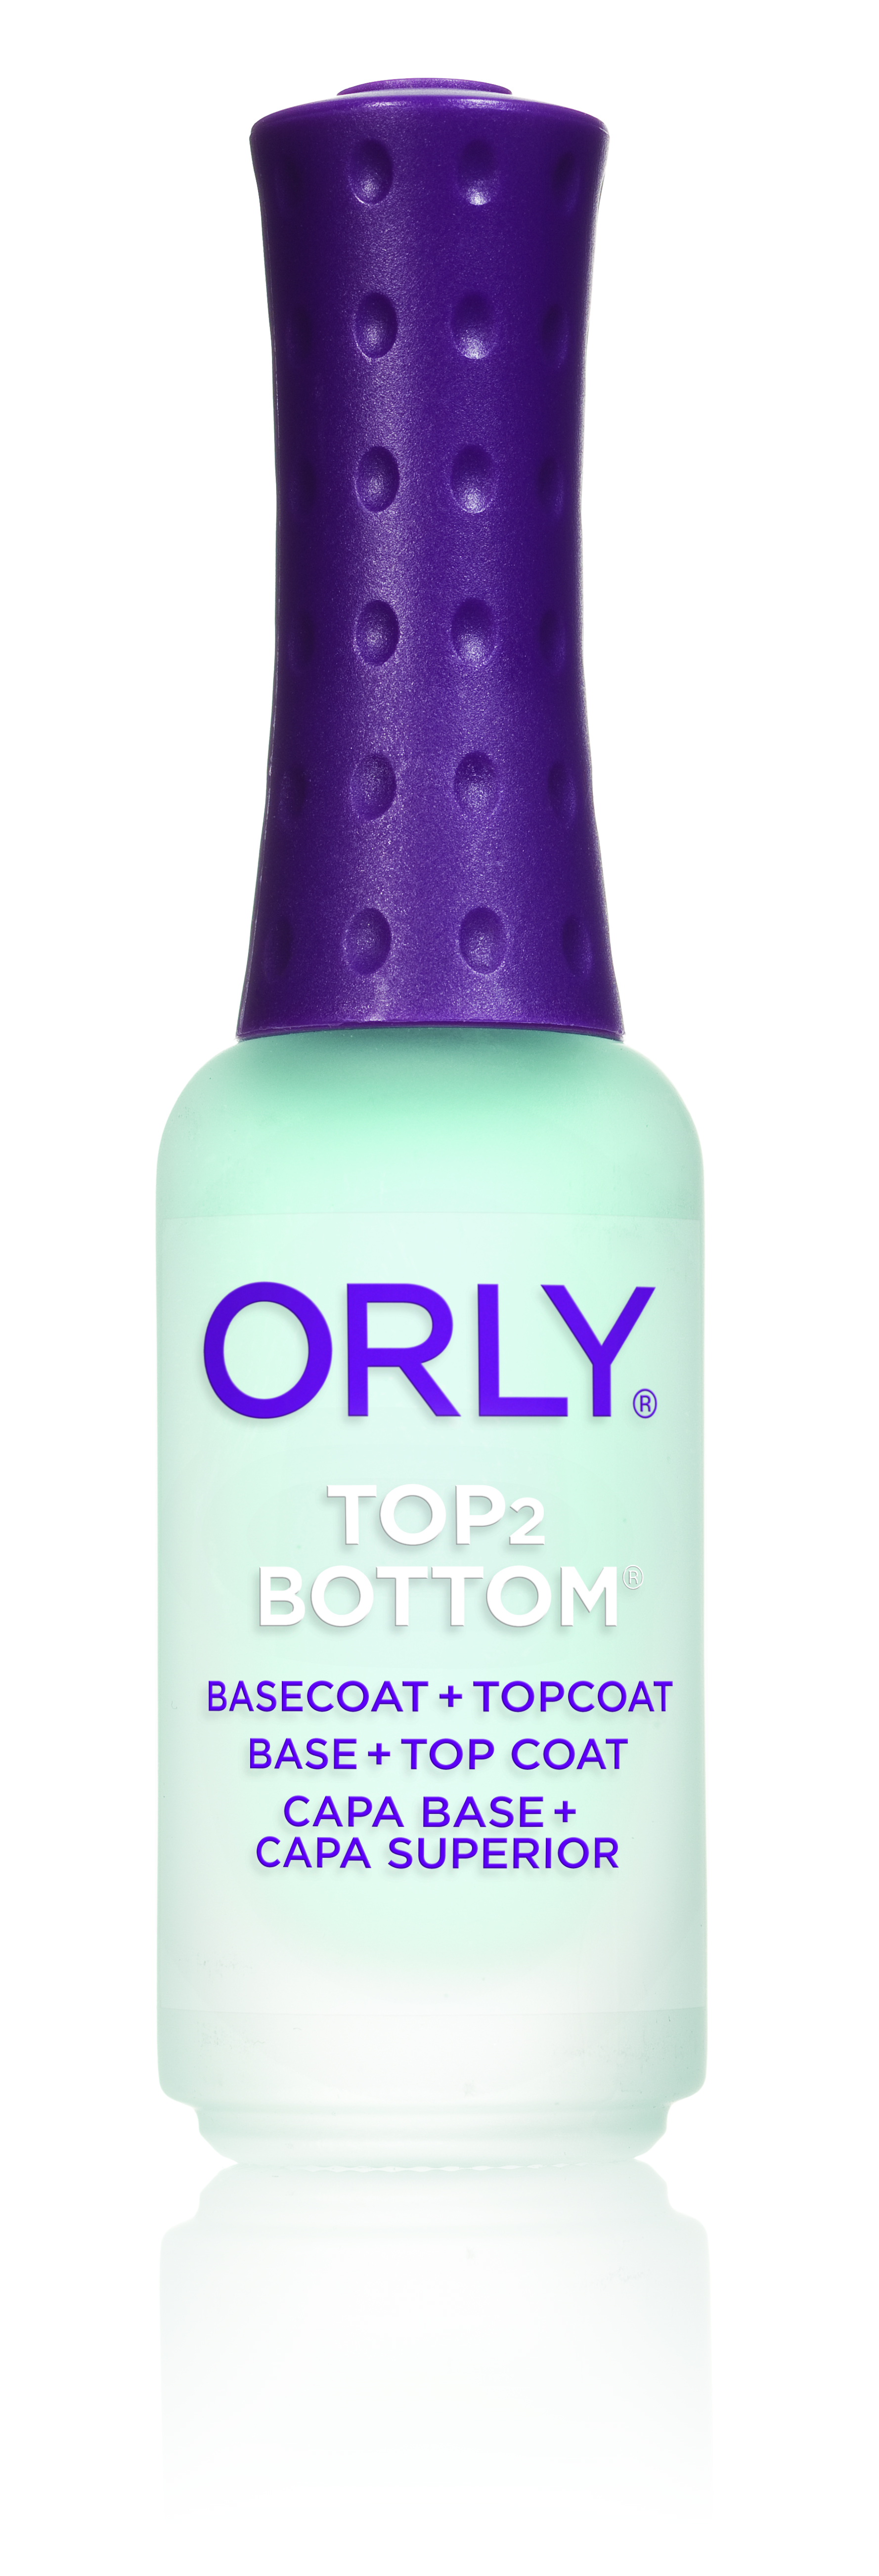 ORLY Покрытие 2 в 1 базовое и верхнее для ногтей / Top 2 Bottom 9 мл zaful solid high leg bikini bottom m cobalt blue